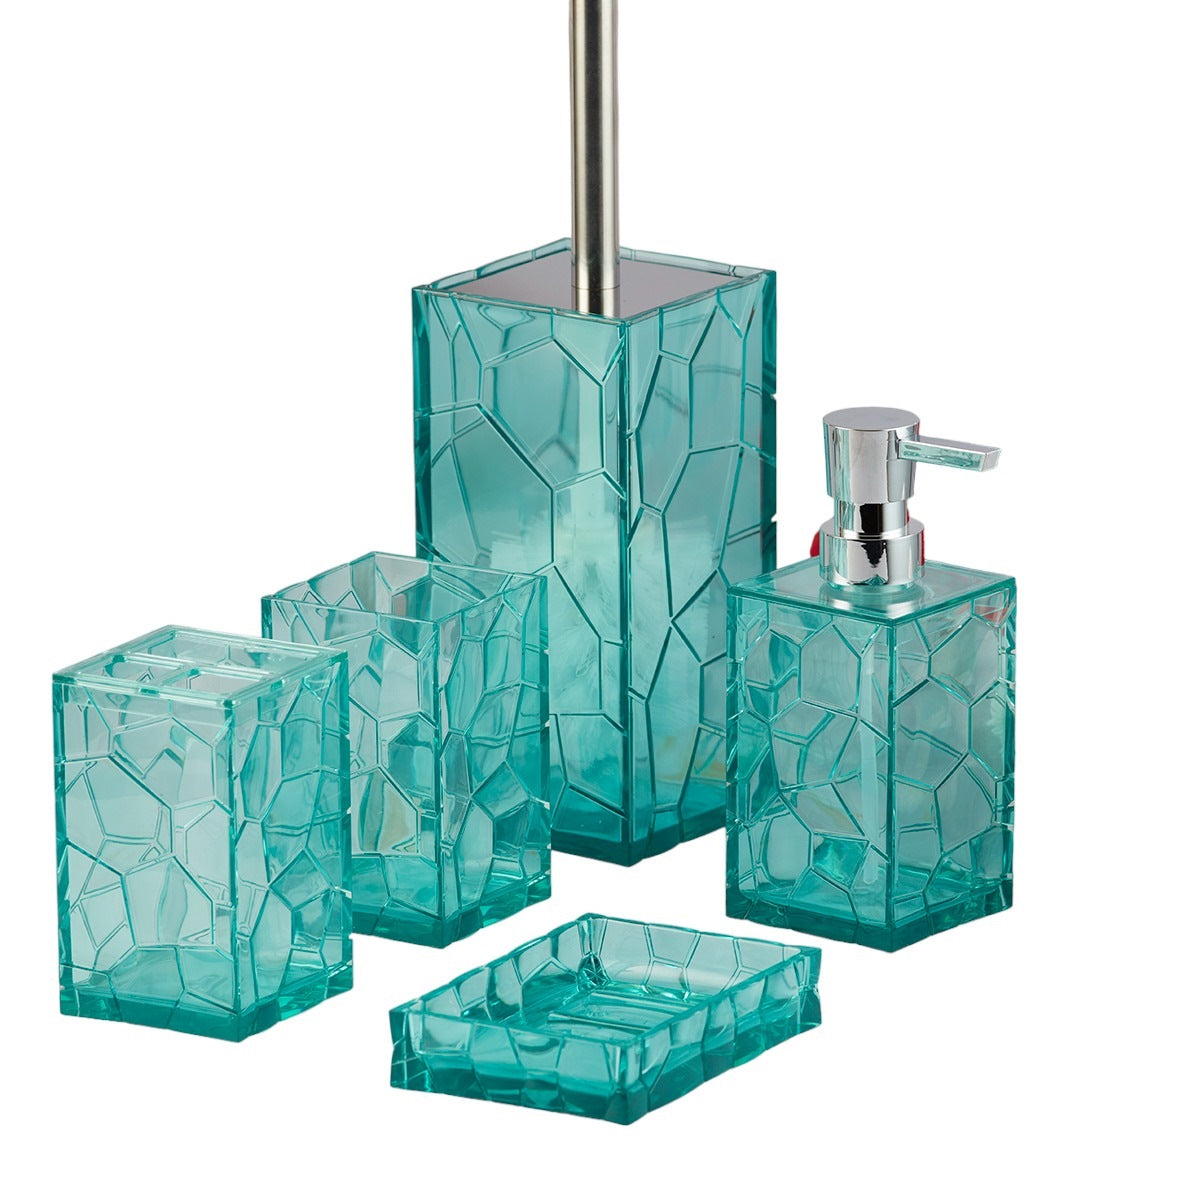 Acrylic Bathroom Accessories Set of 5 Bath Set with Soap Dispenser (10043)